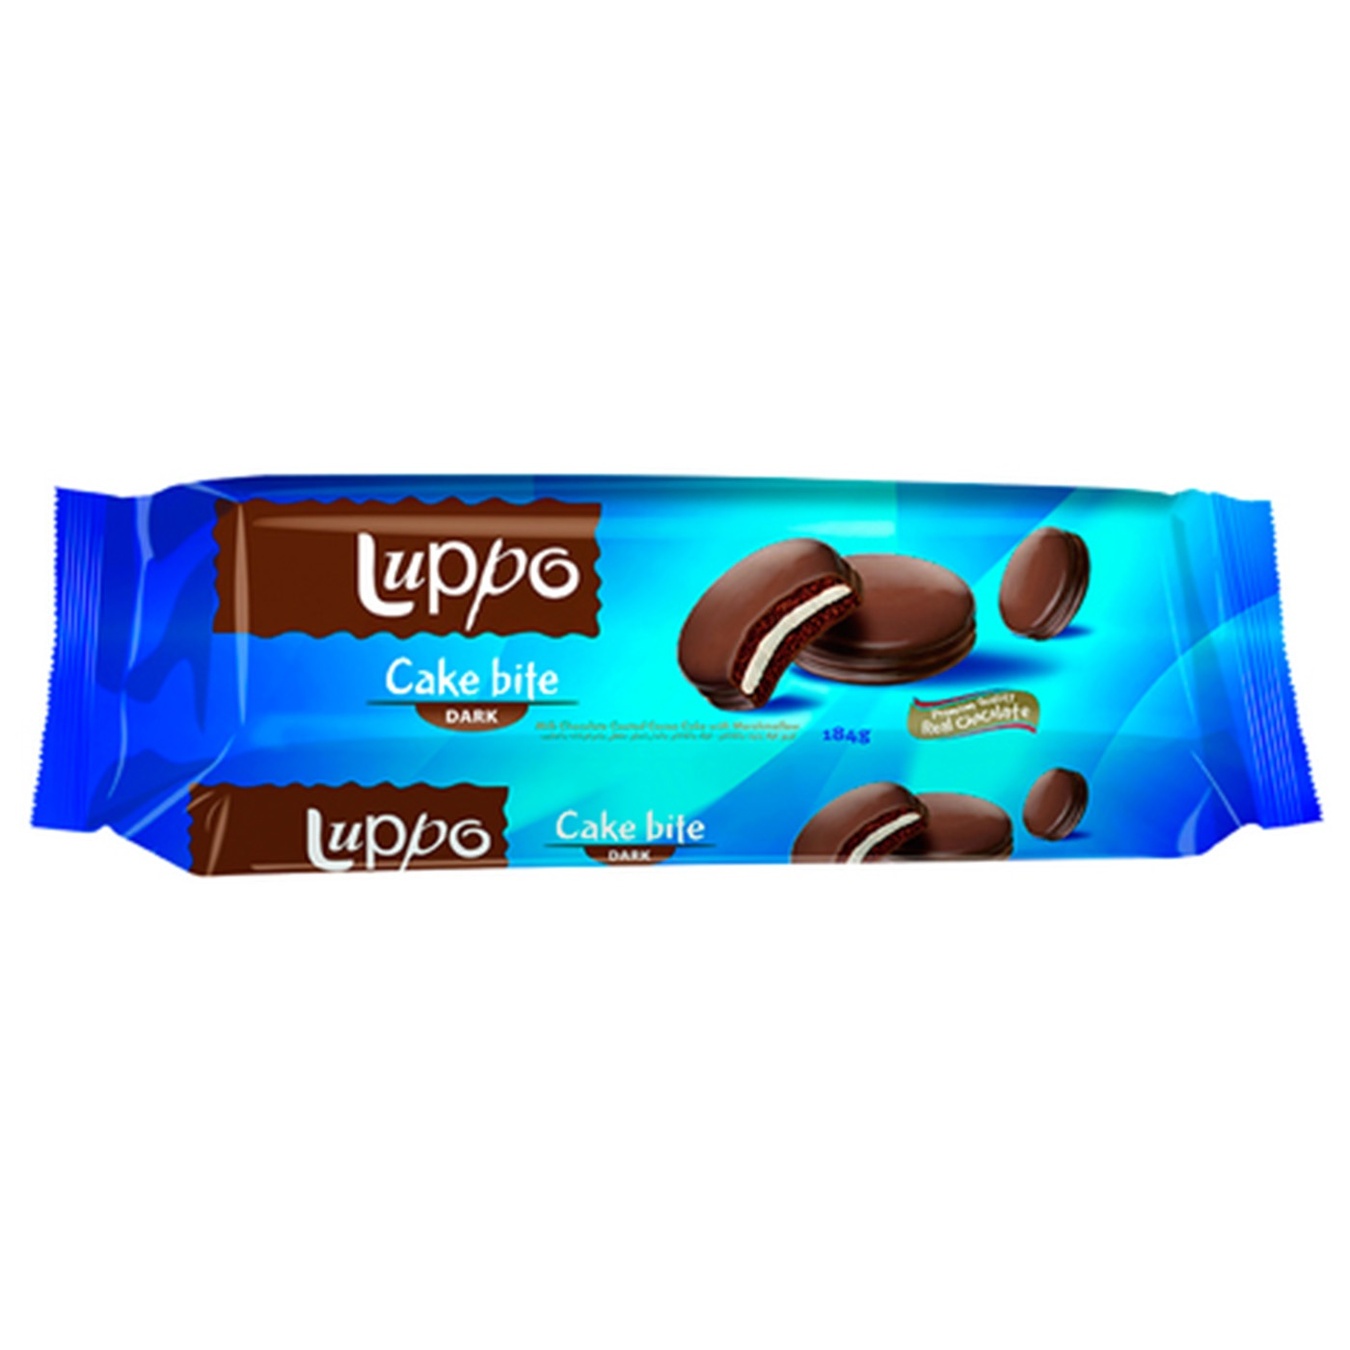 Кекс Luppo ŞÖLEN из какао и маршмеллоу в молочном шоколаде 184г